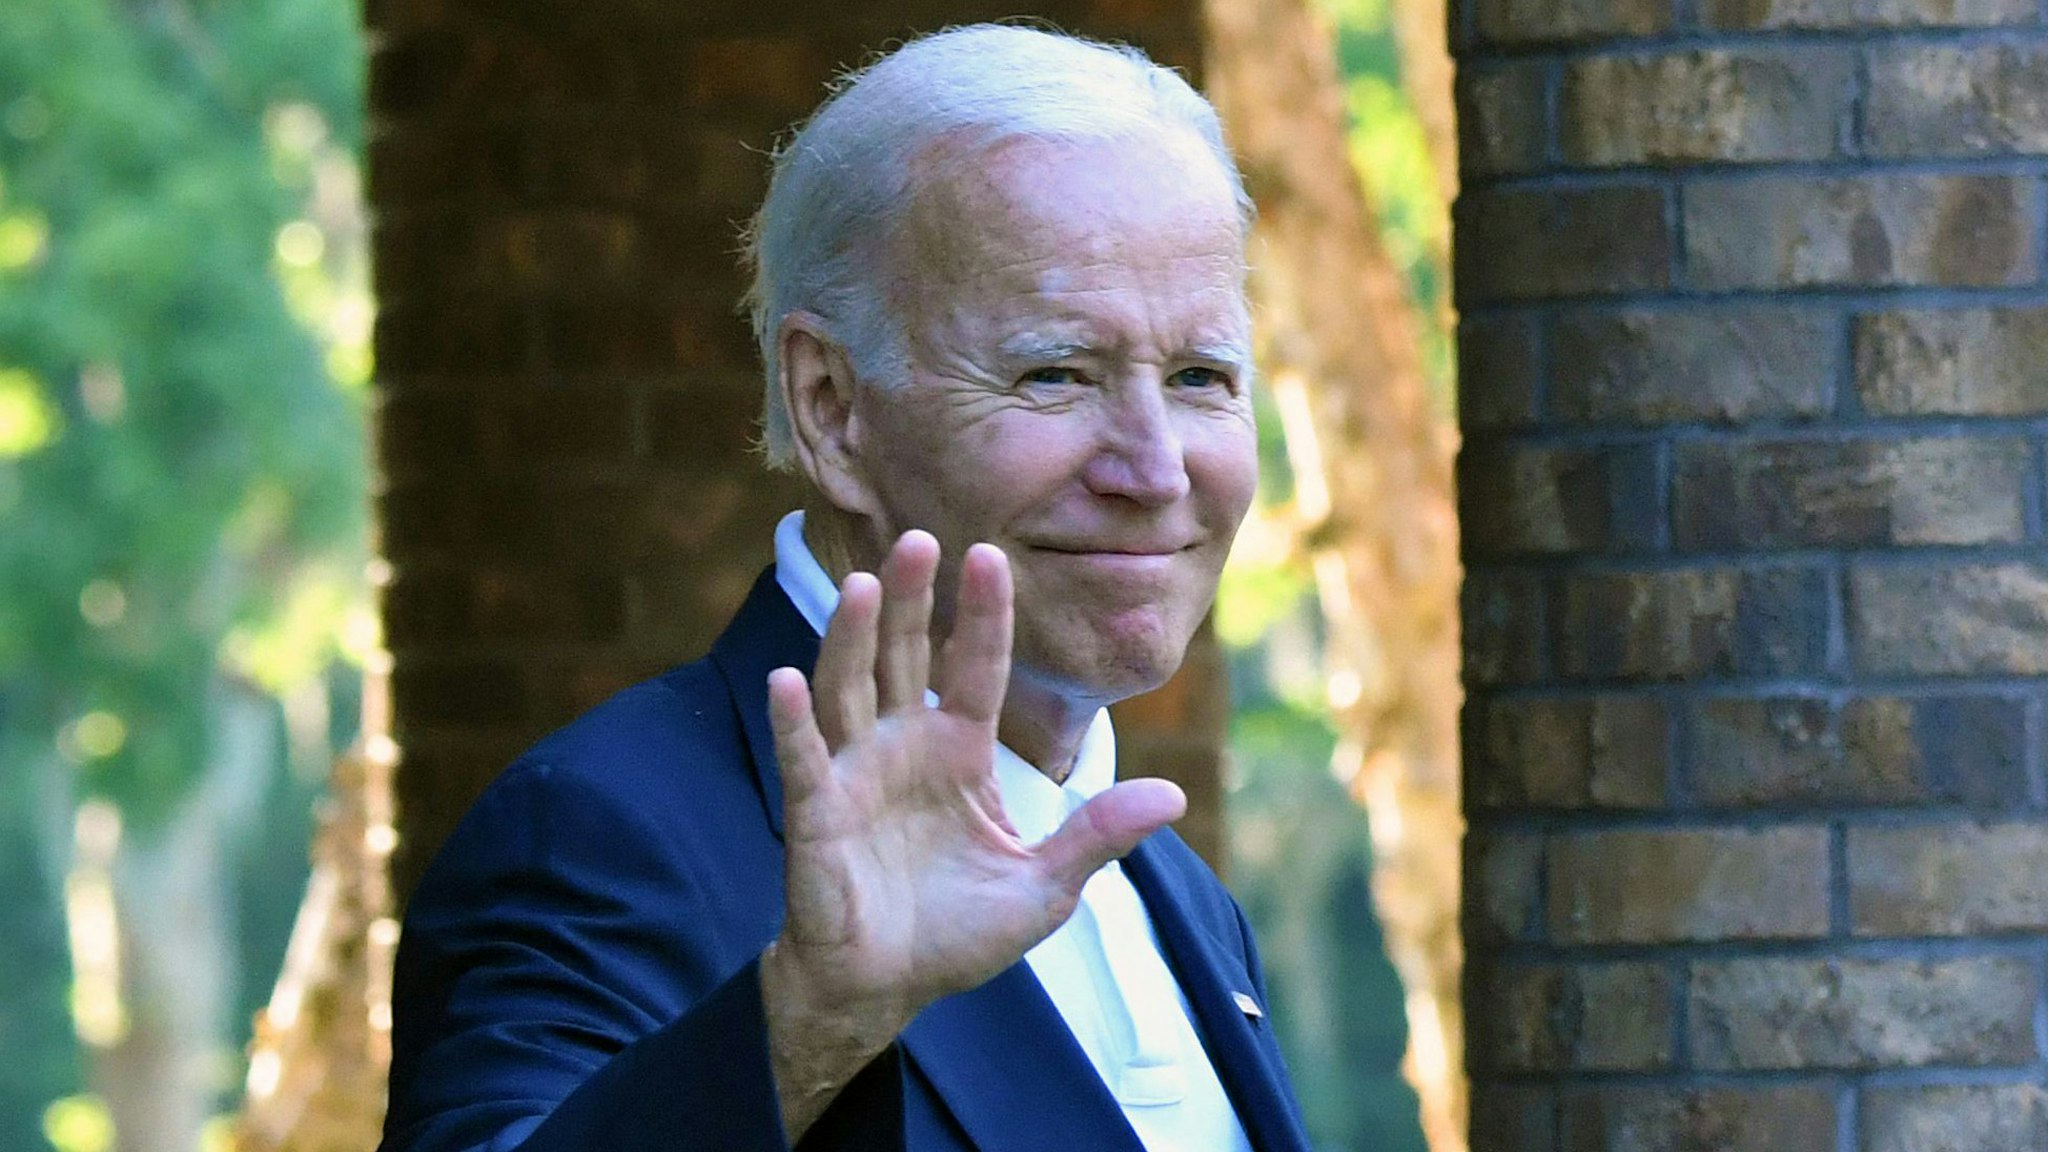 Senior Democrat Says Biden is ‘Not Running Again’ in 2024